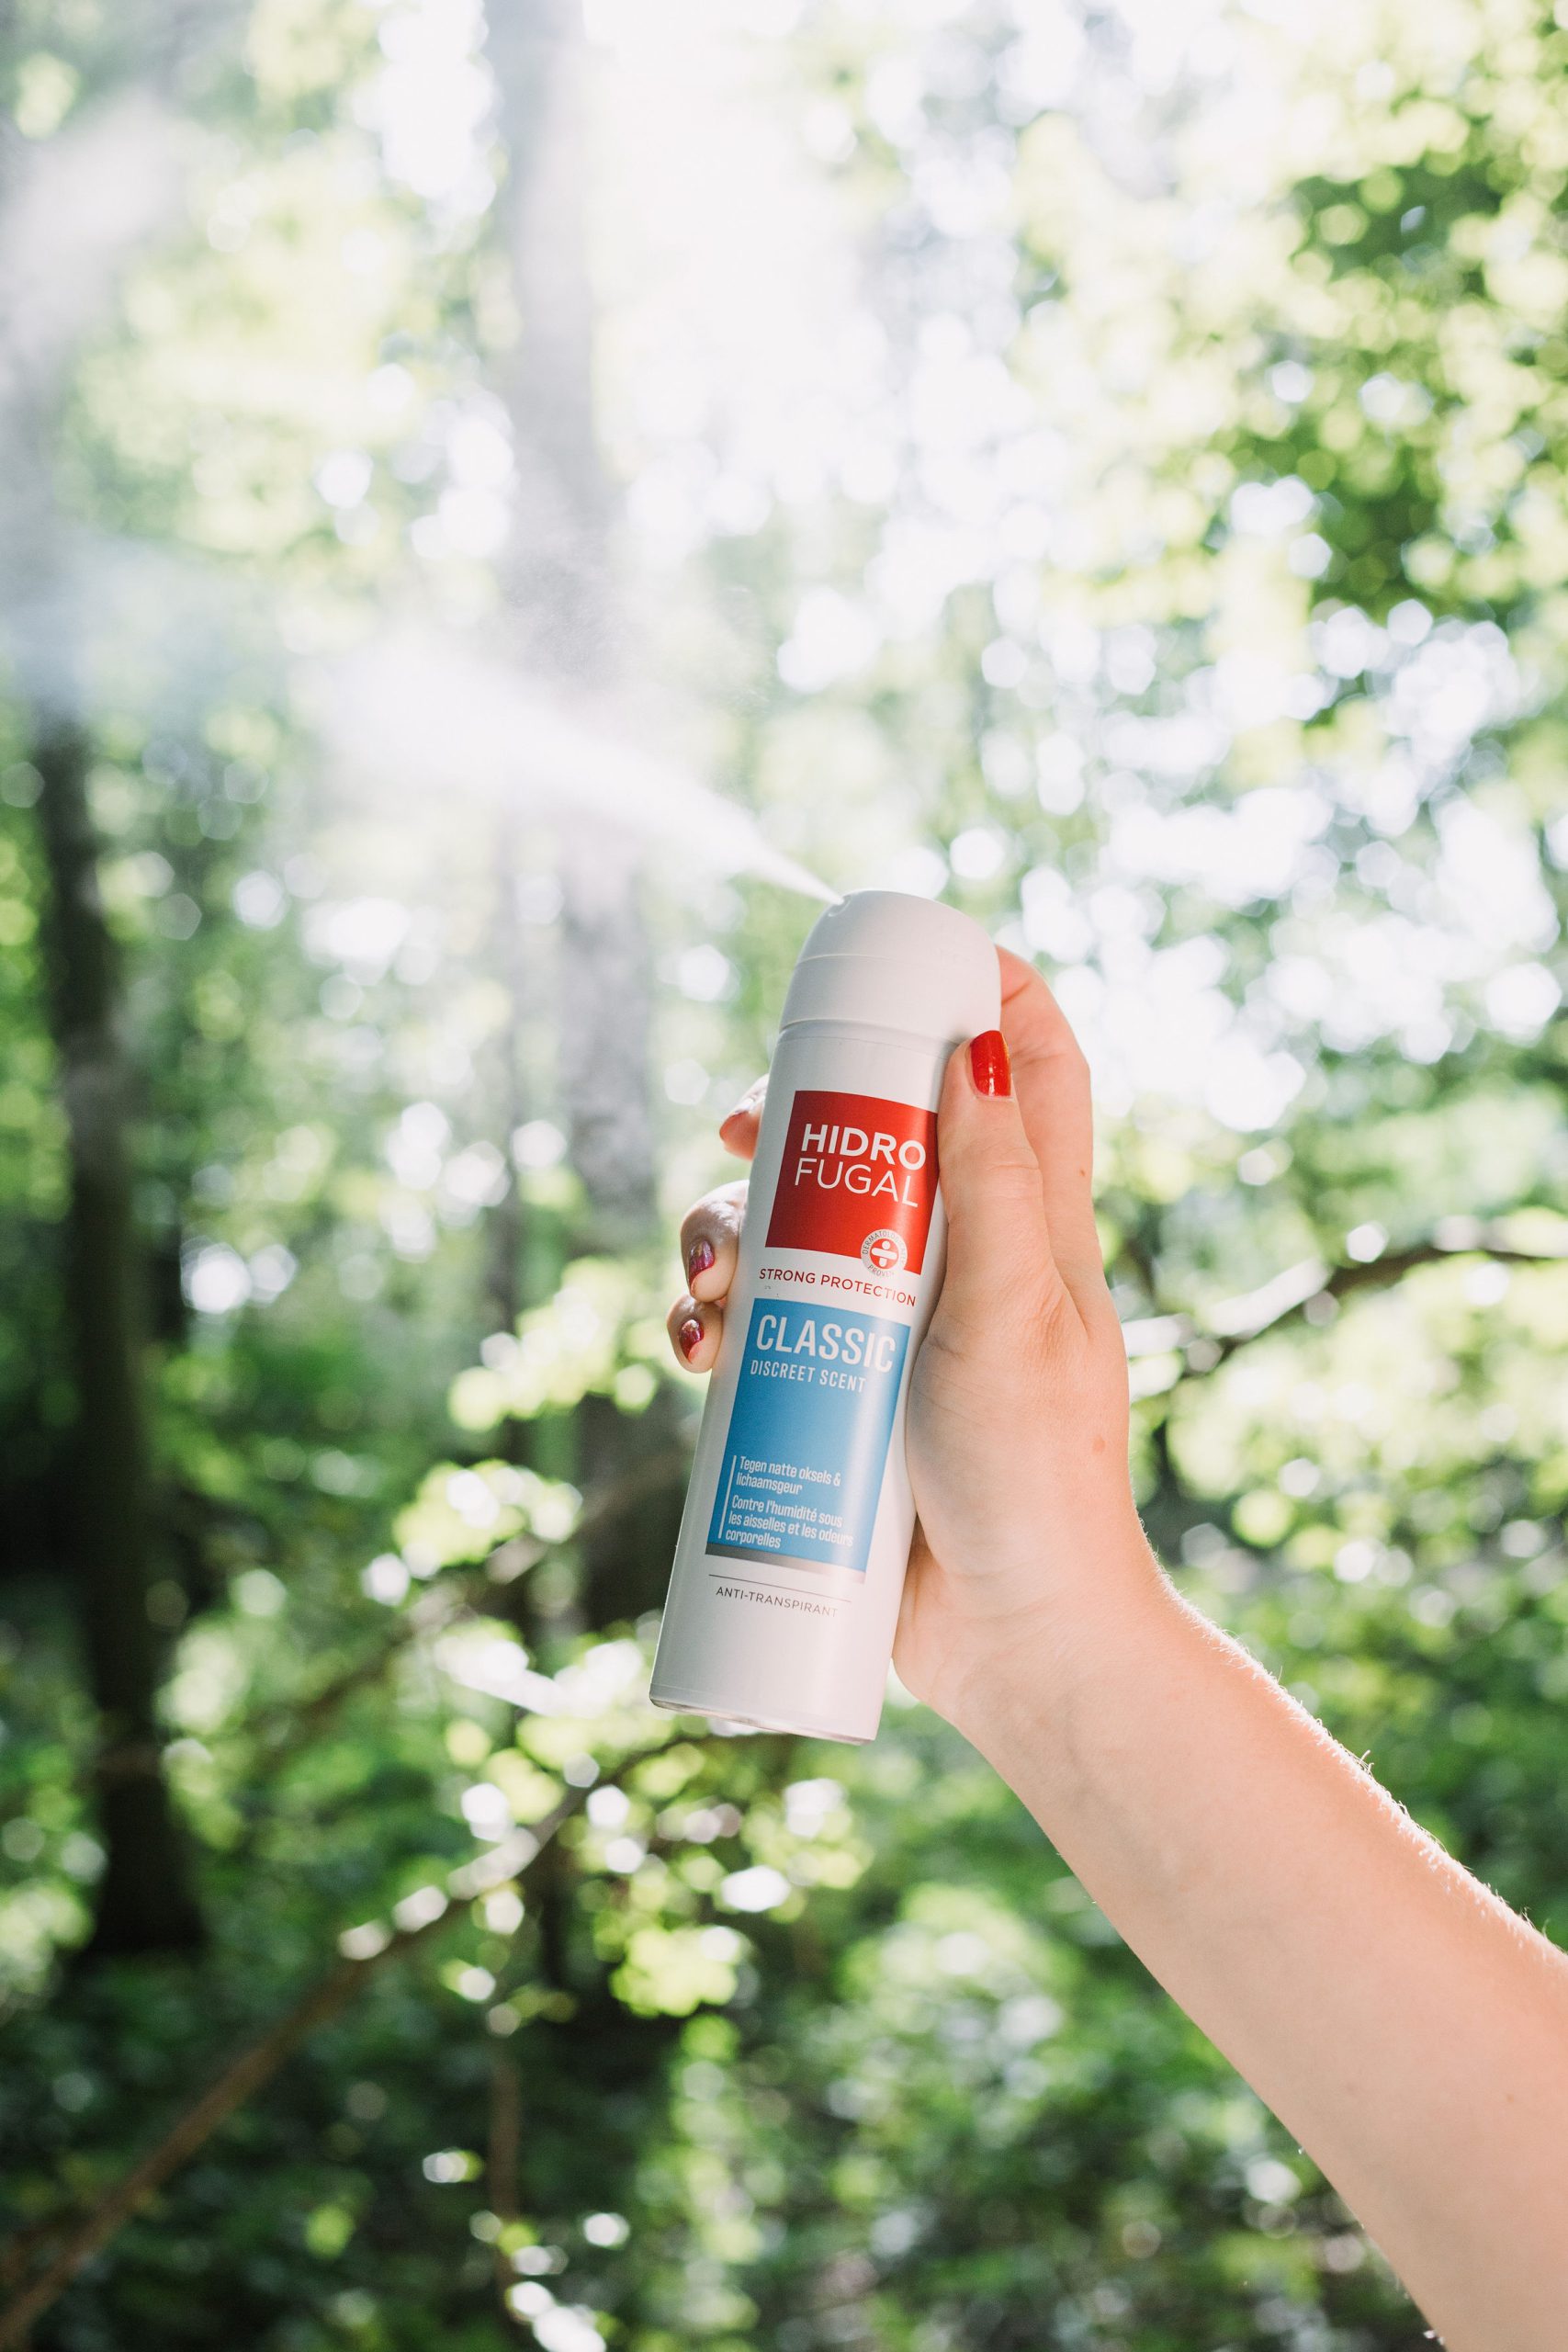 Hidrofugal deodorant review